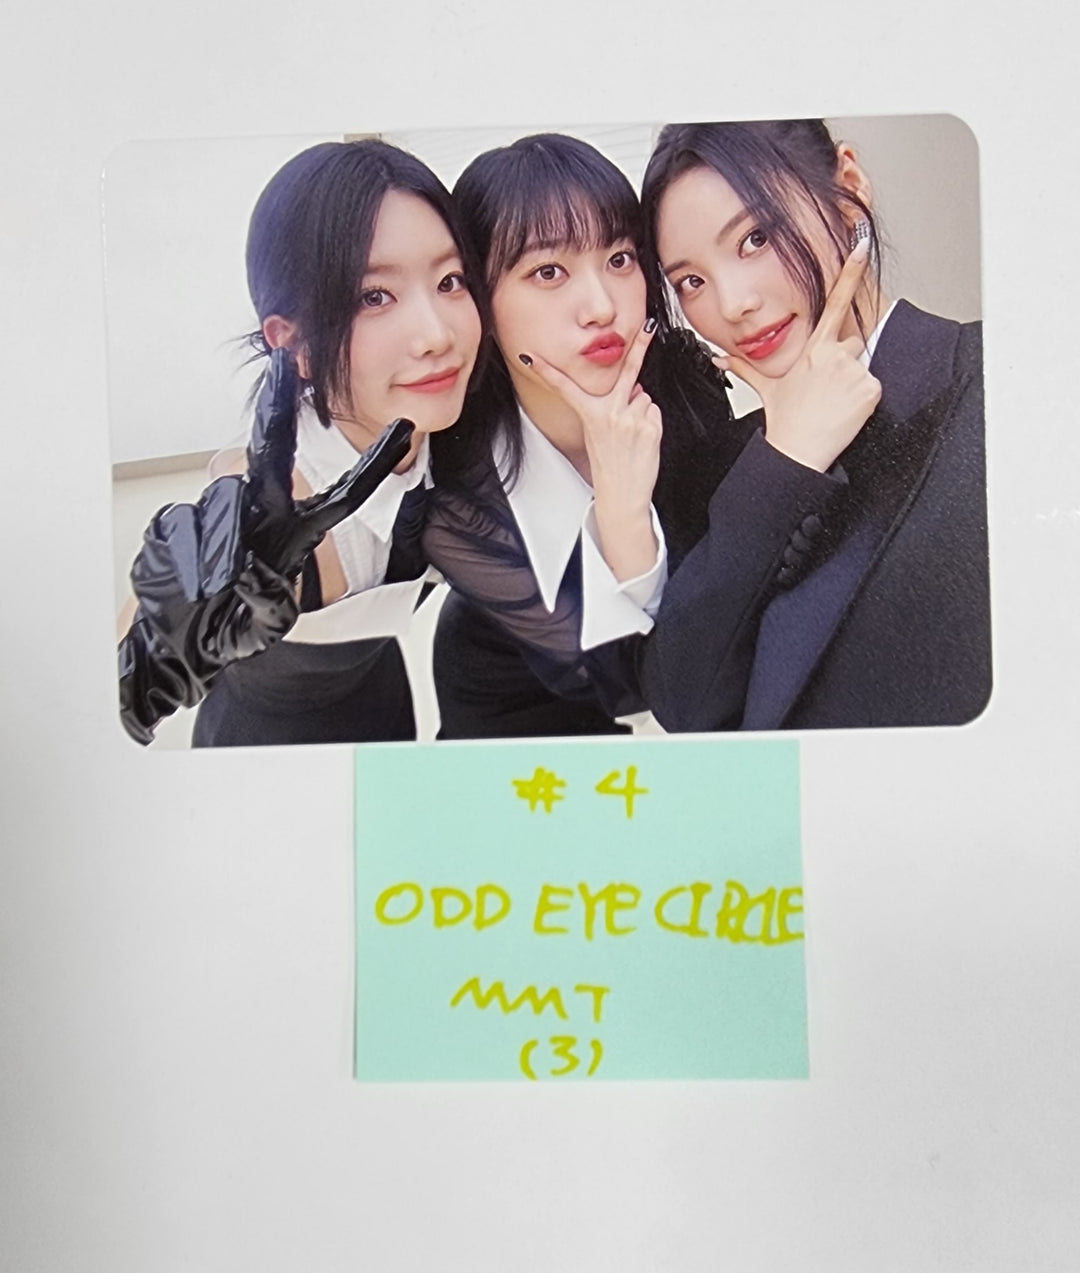 ODD EYE CIRCLE "Version Up"- MMT Fansign Event Mini Postcard